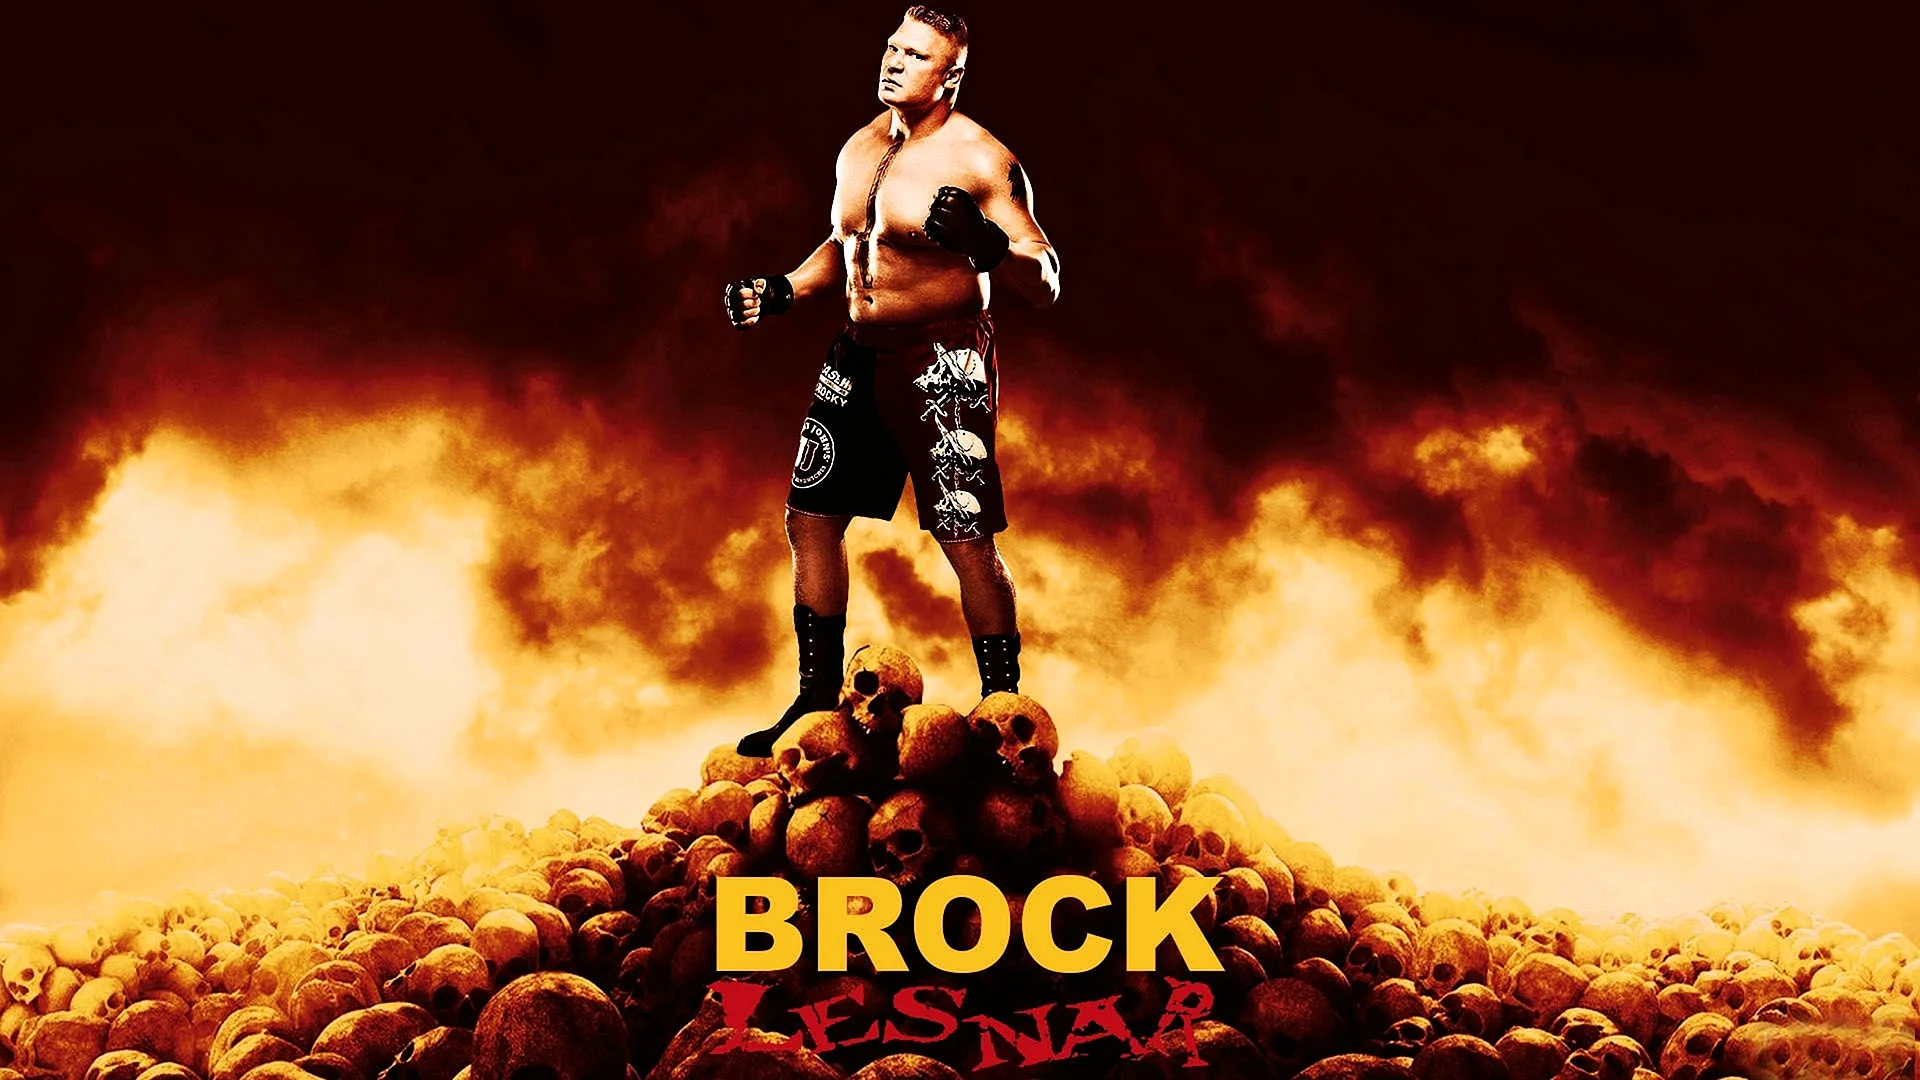 UFC Brock Lesnar Wallpaper